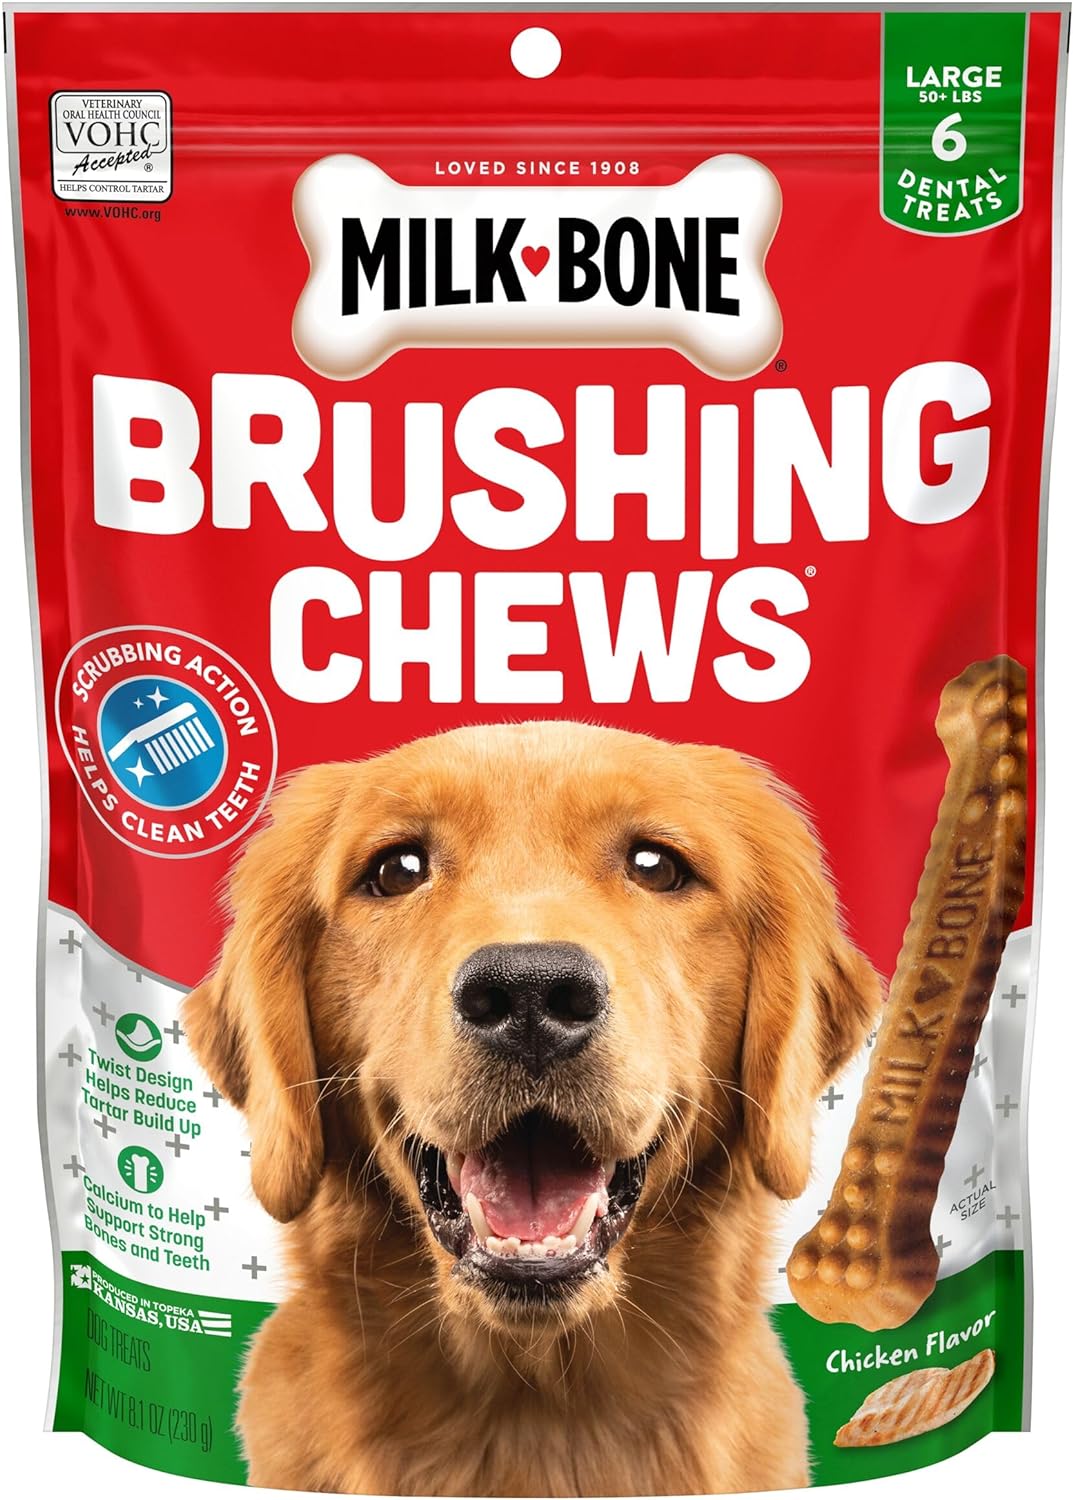 Milk-Bone Original Brushing Chews, 6 Large Daily Dental Dog Treats (Pack of 5) Scrubbing Action Helps Clean Teeth